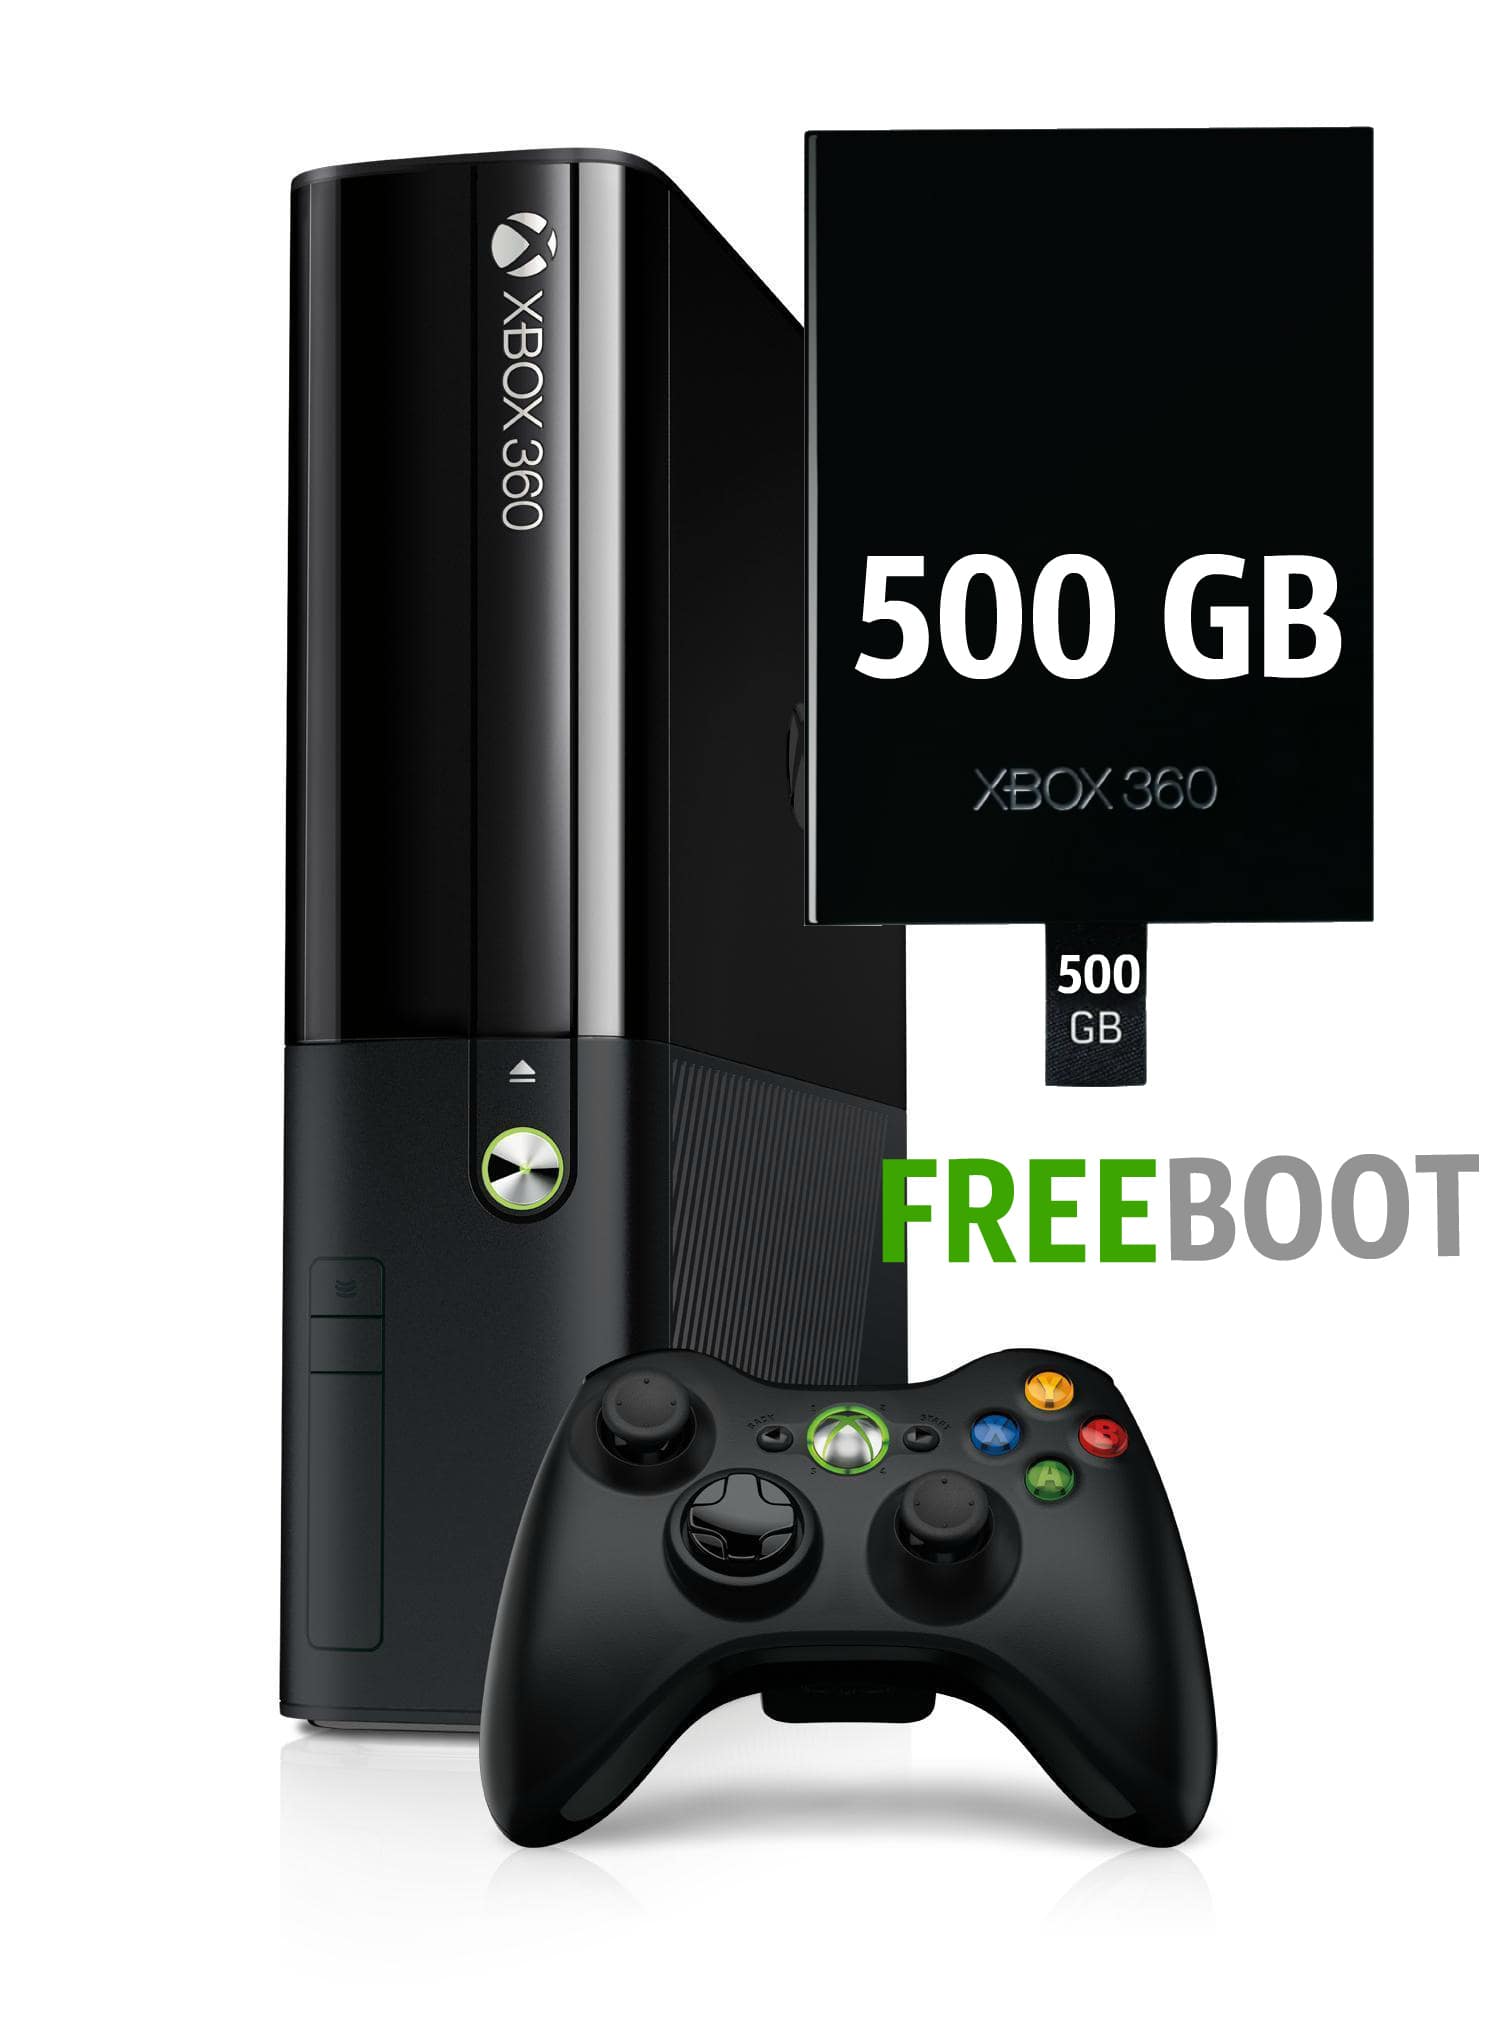 Xbox 360 E 500 Gb Freeboot (450 игр на HDD)